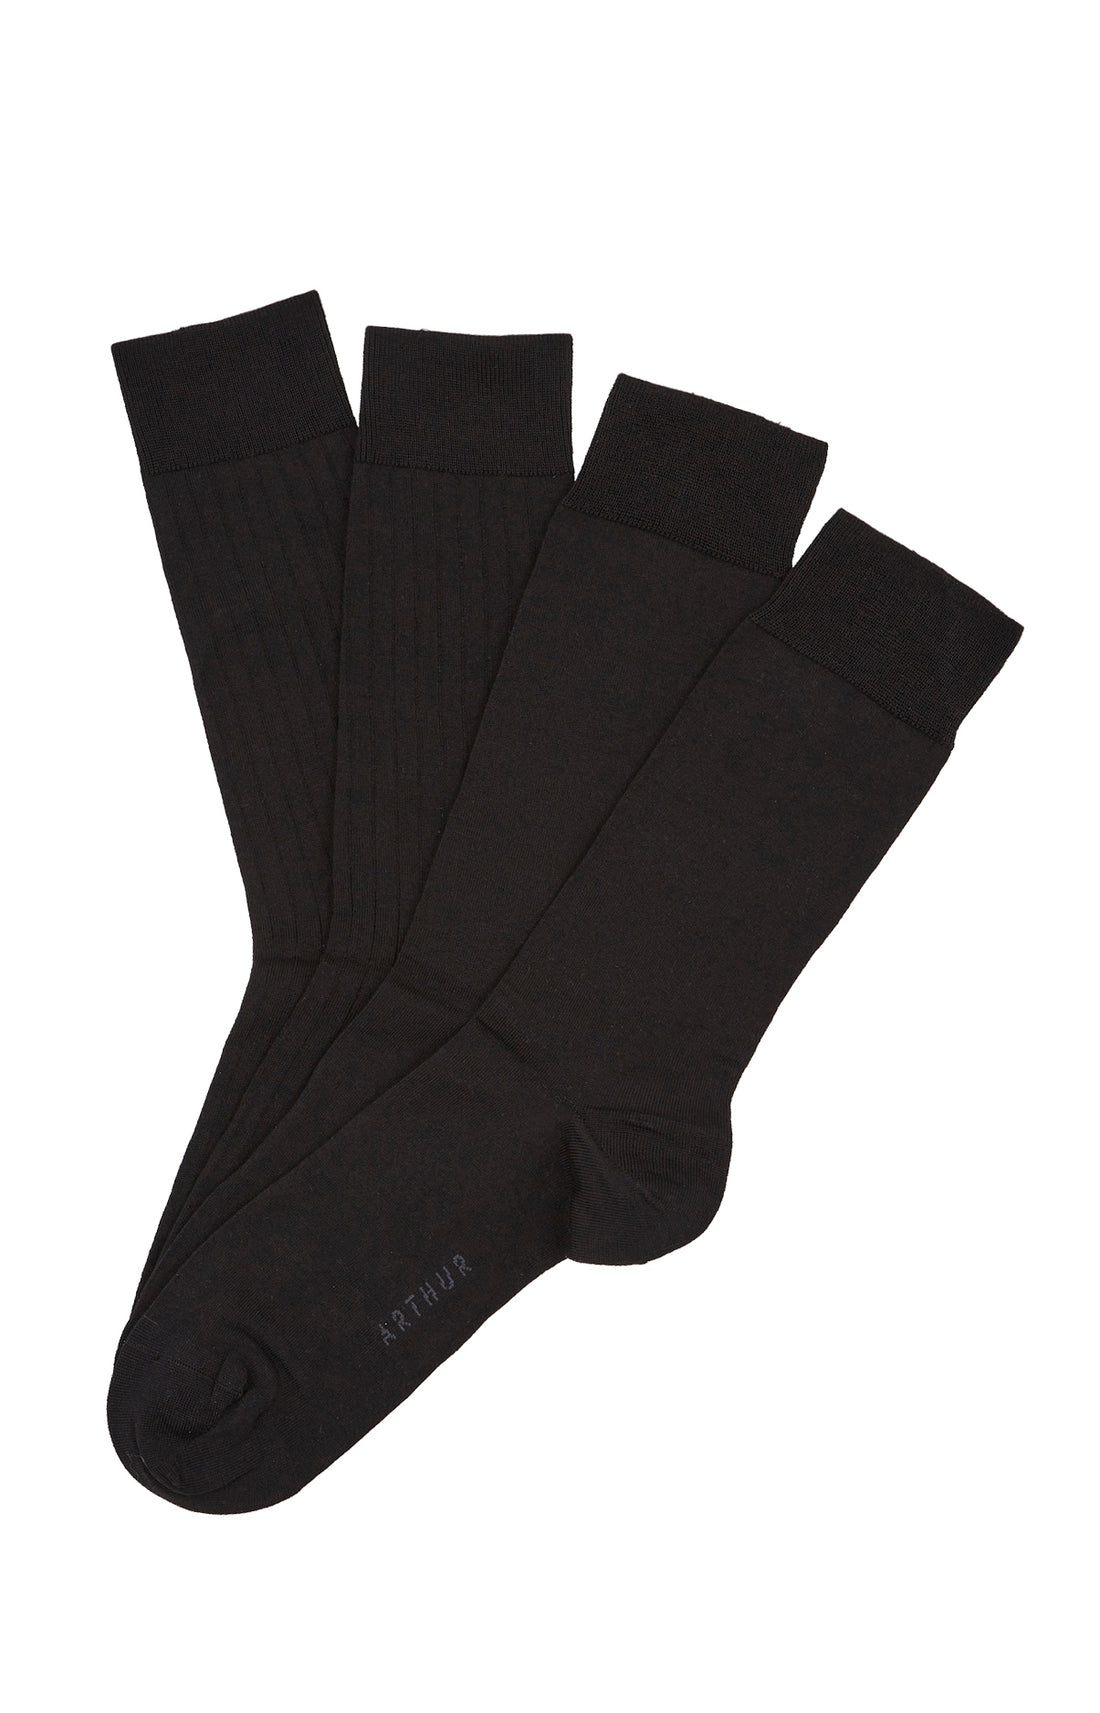 Pack of socks - Scottish thread